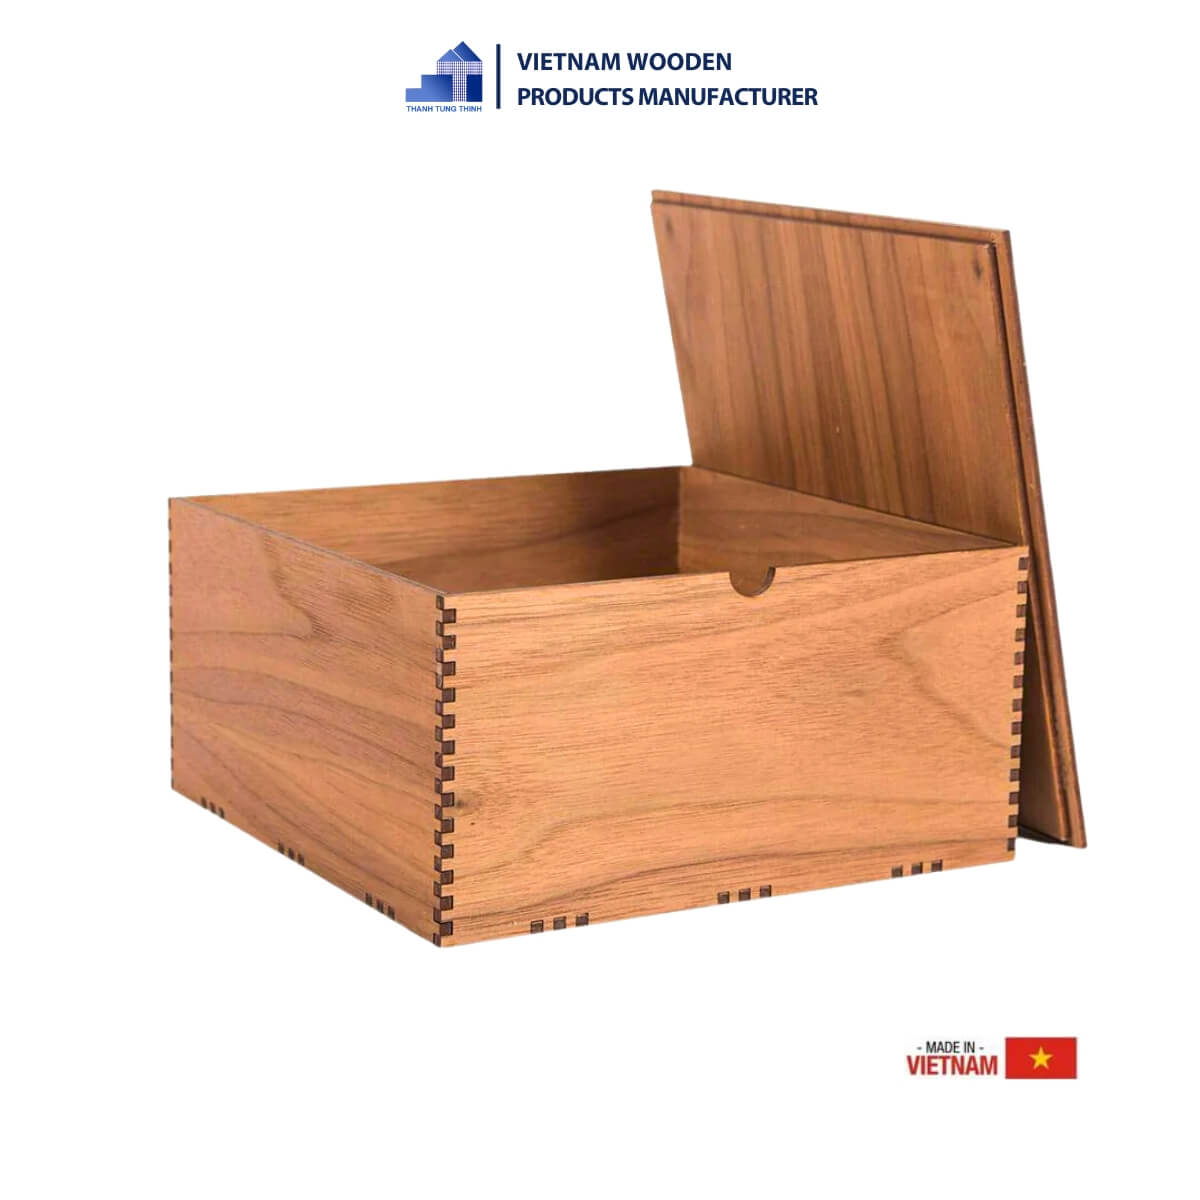 wooden-gift-box-manufacturer 7-2-2-1